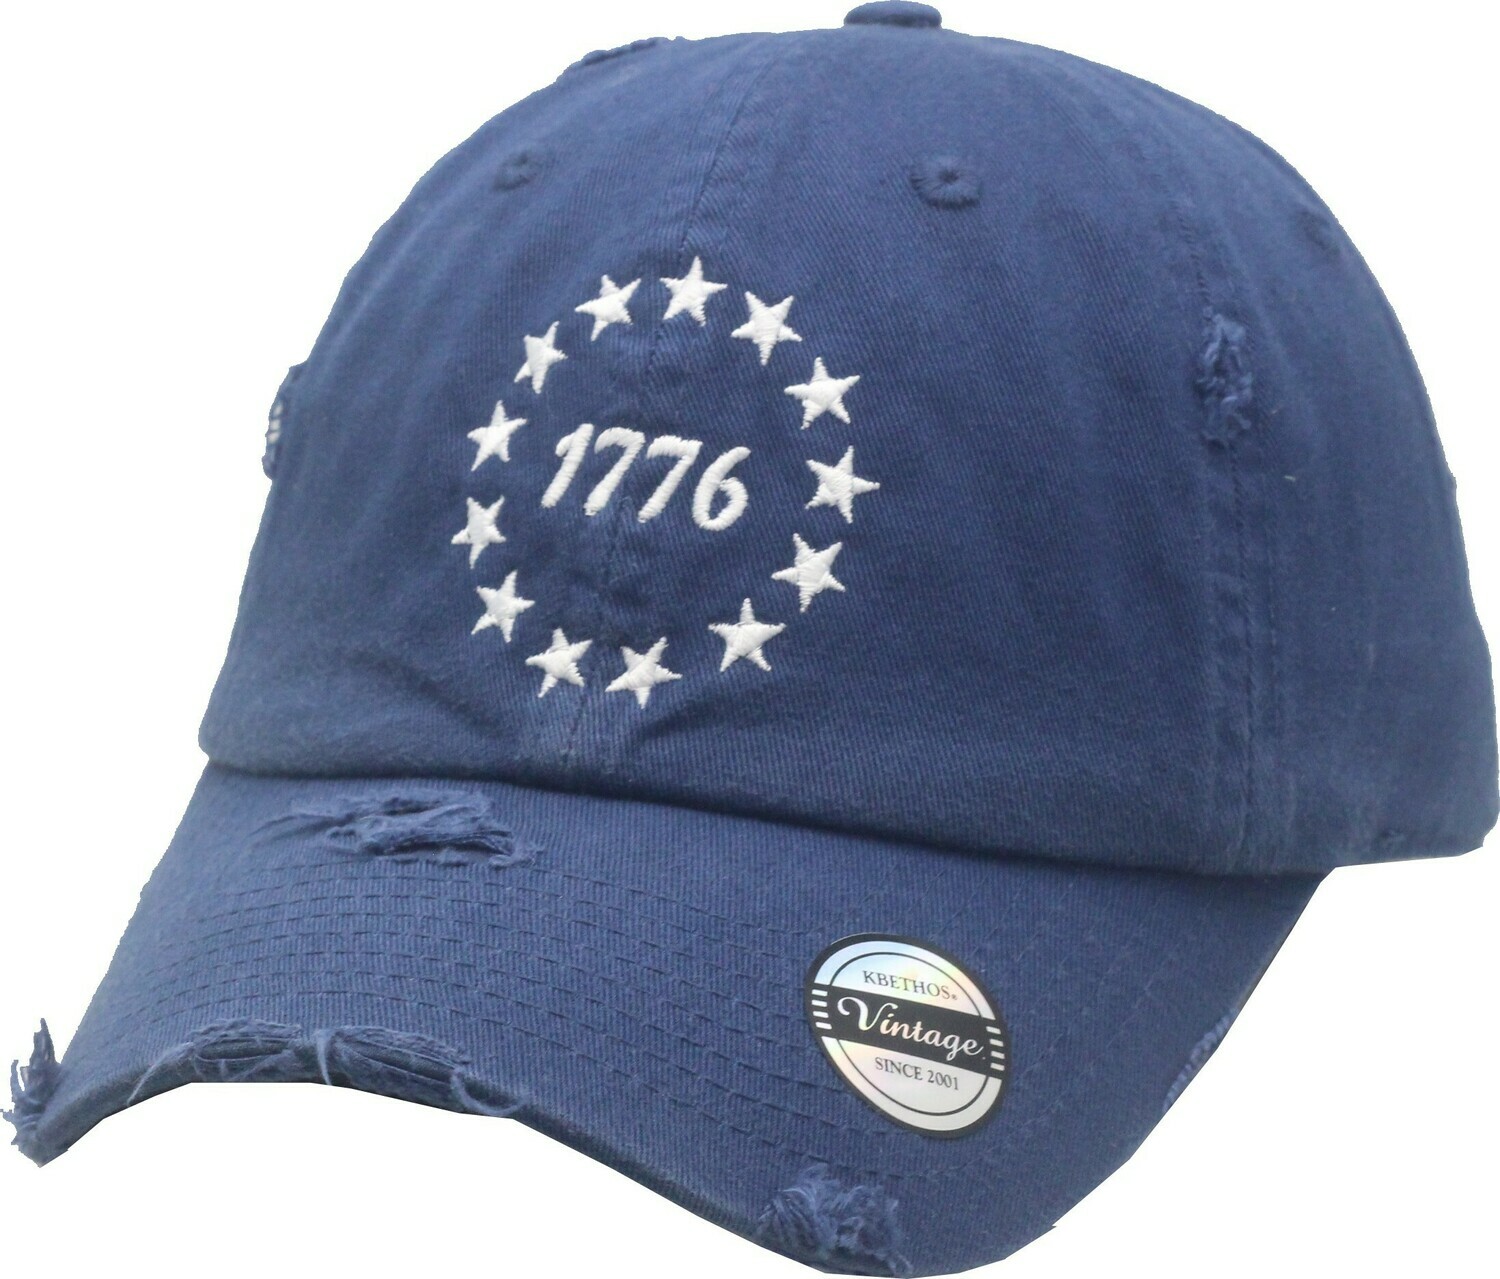 1776 Star Distressed Navy Vintage Buckle Back Hat